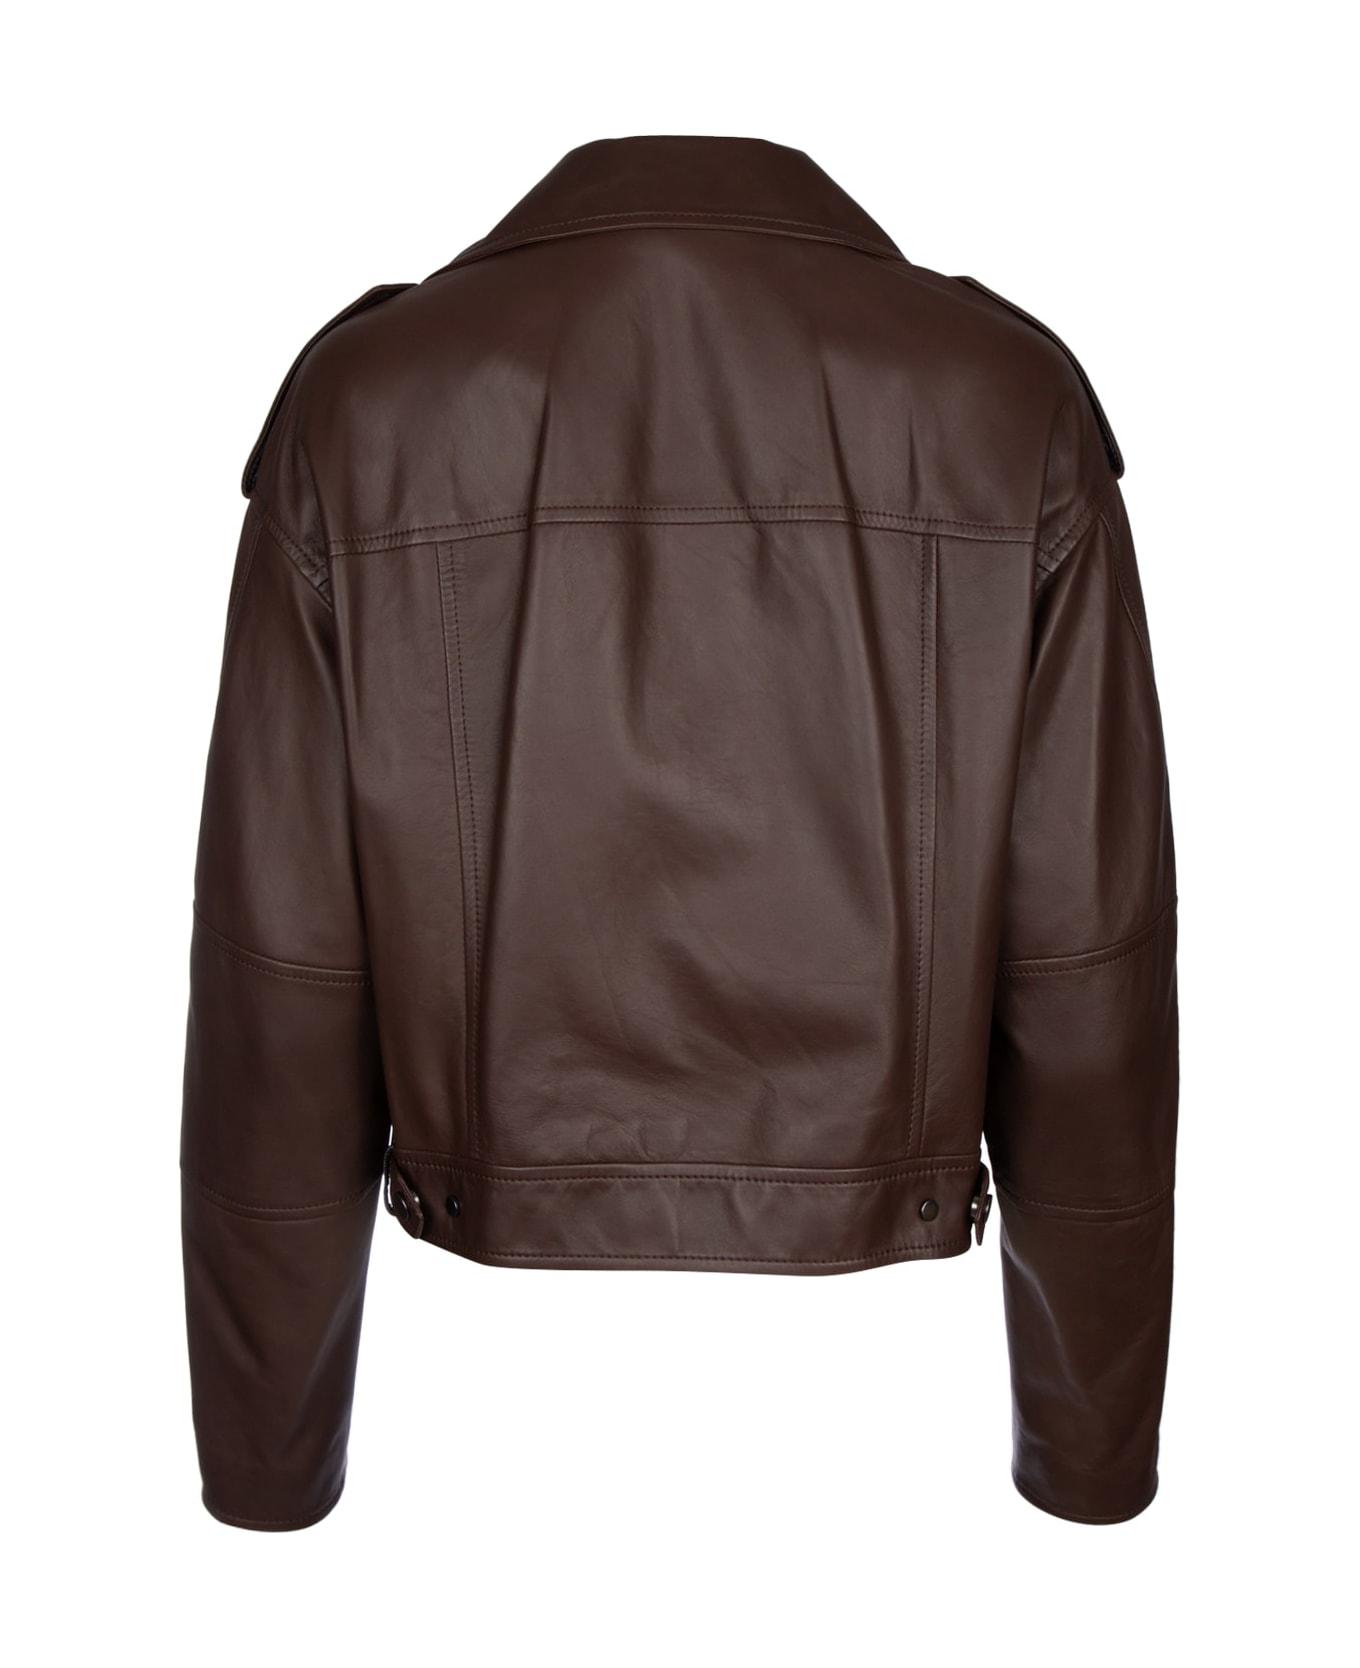 Brunello Cucinelli Leather Jacket - TESTADIMORO レザージャケット